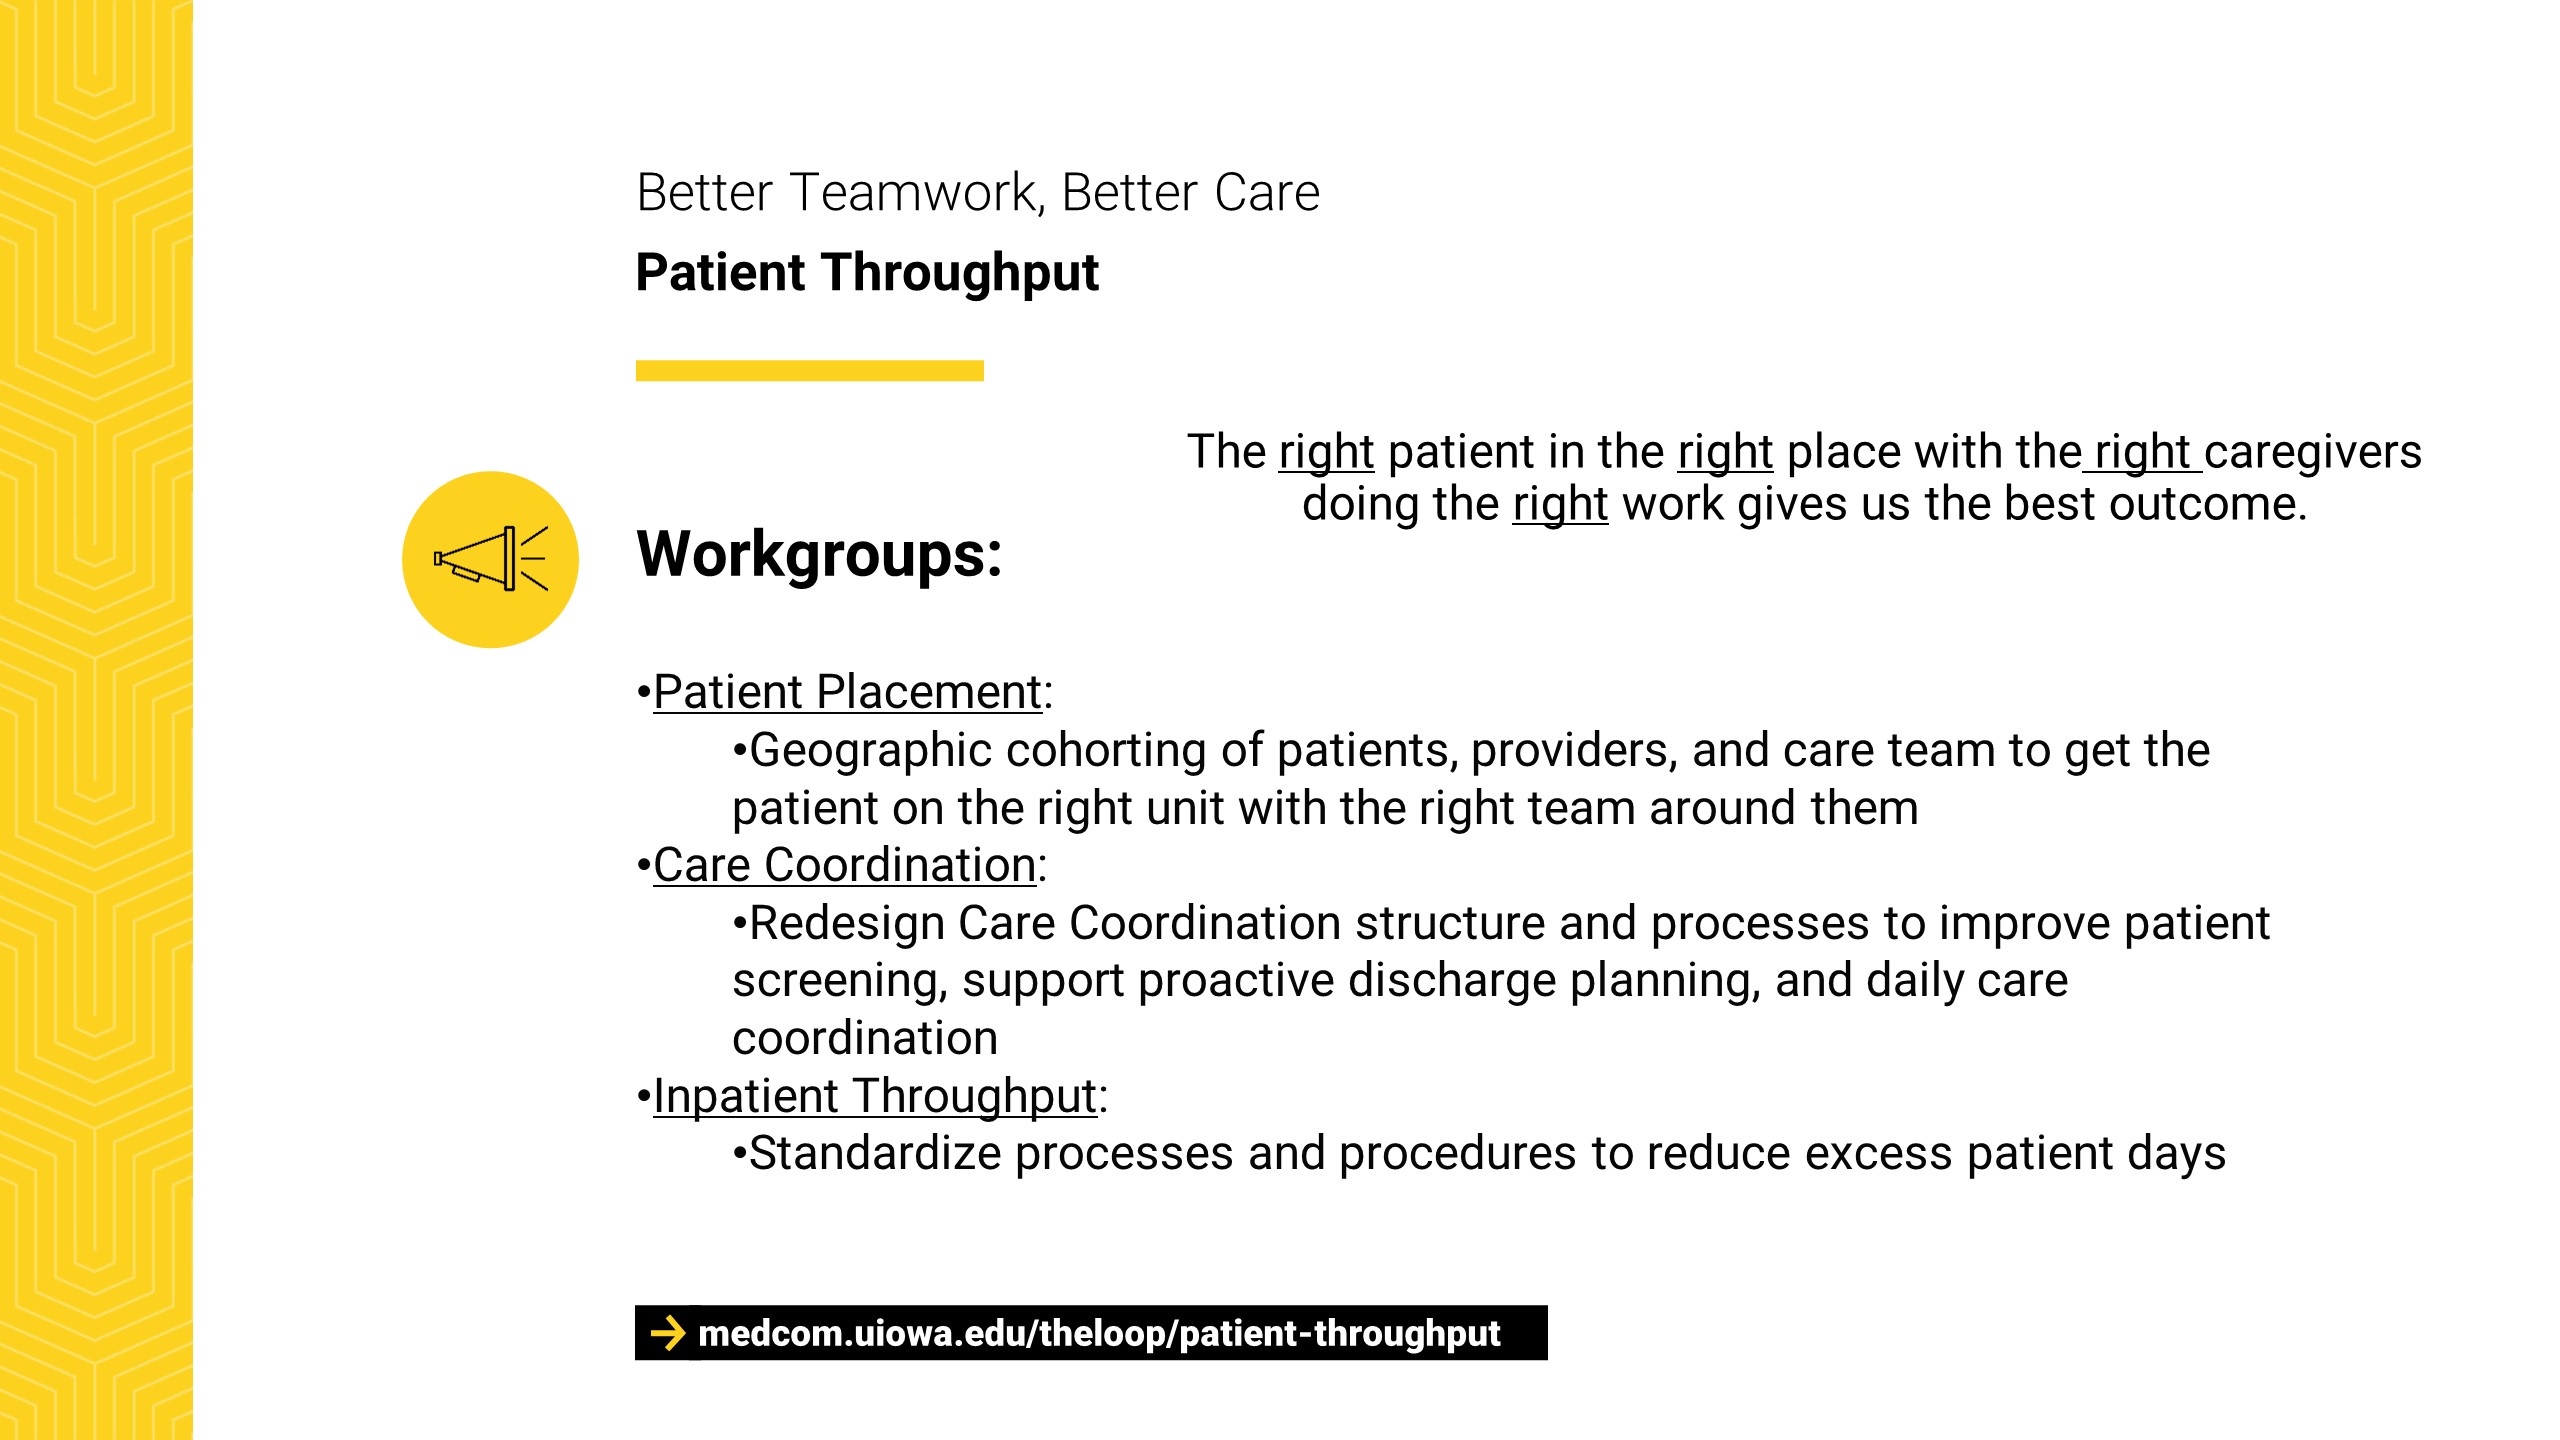 BTBC Overview - Patient Throughput